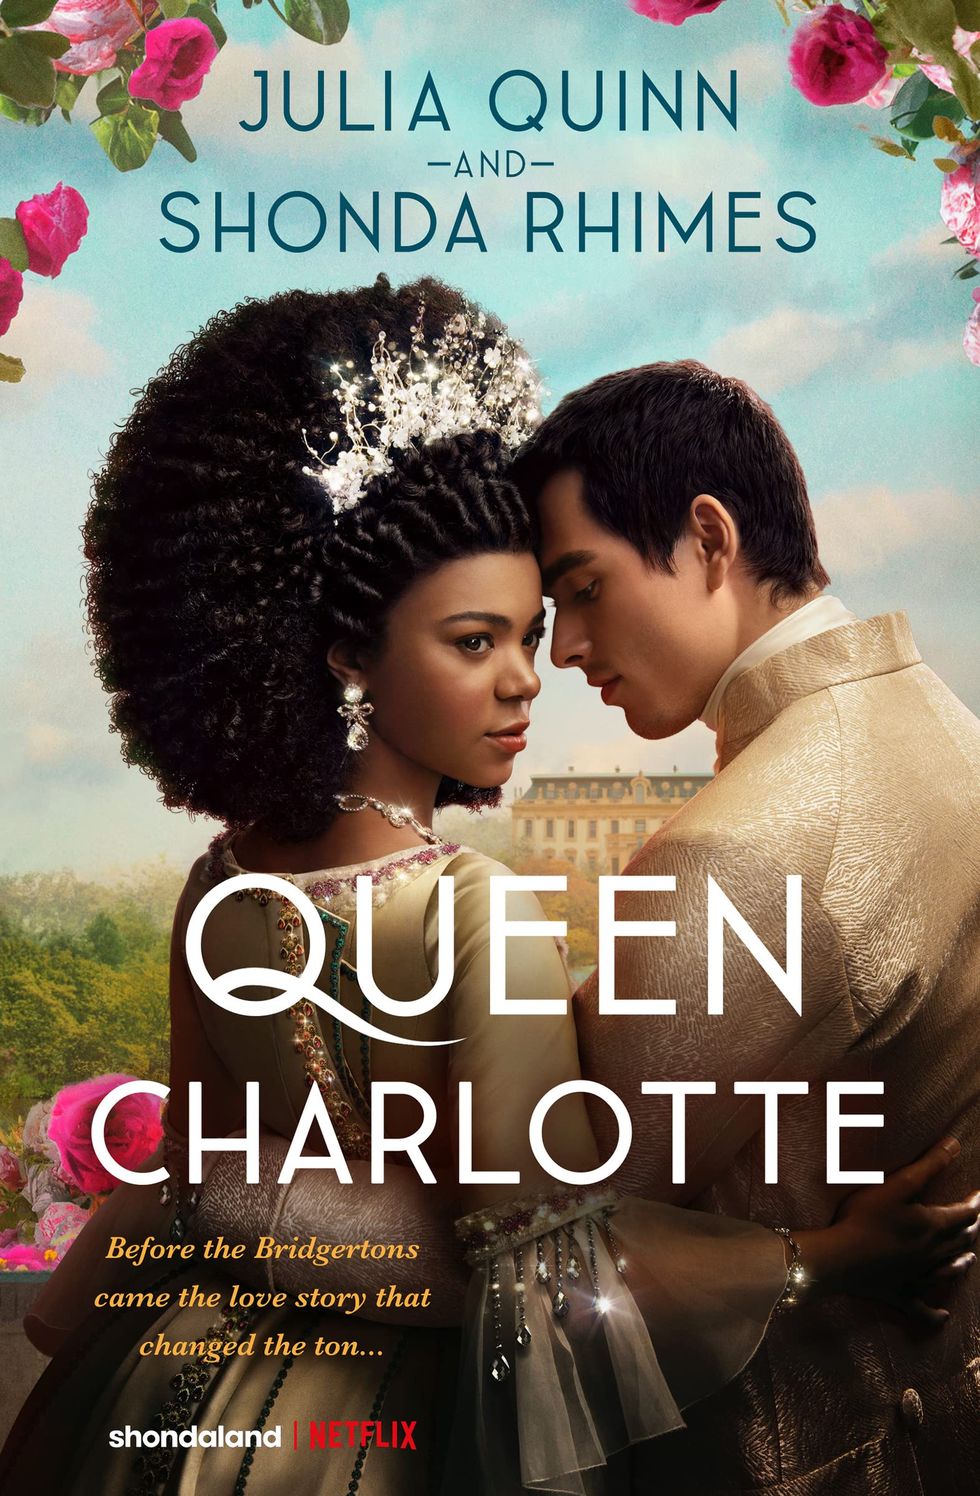 Bridgerton Might've Secretly Revealed Its Queen Charlotte Prequel